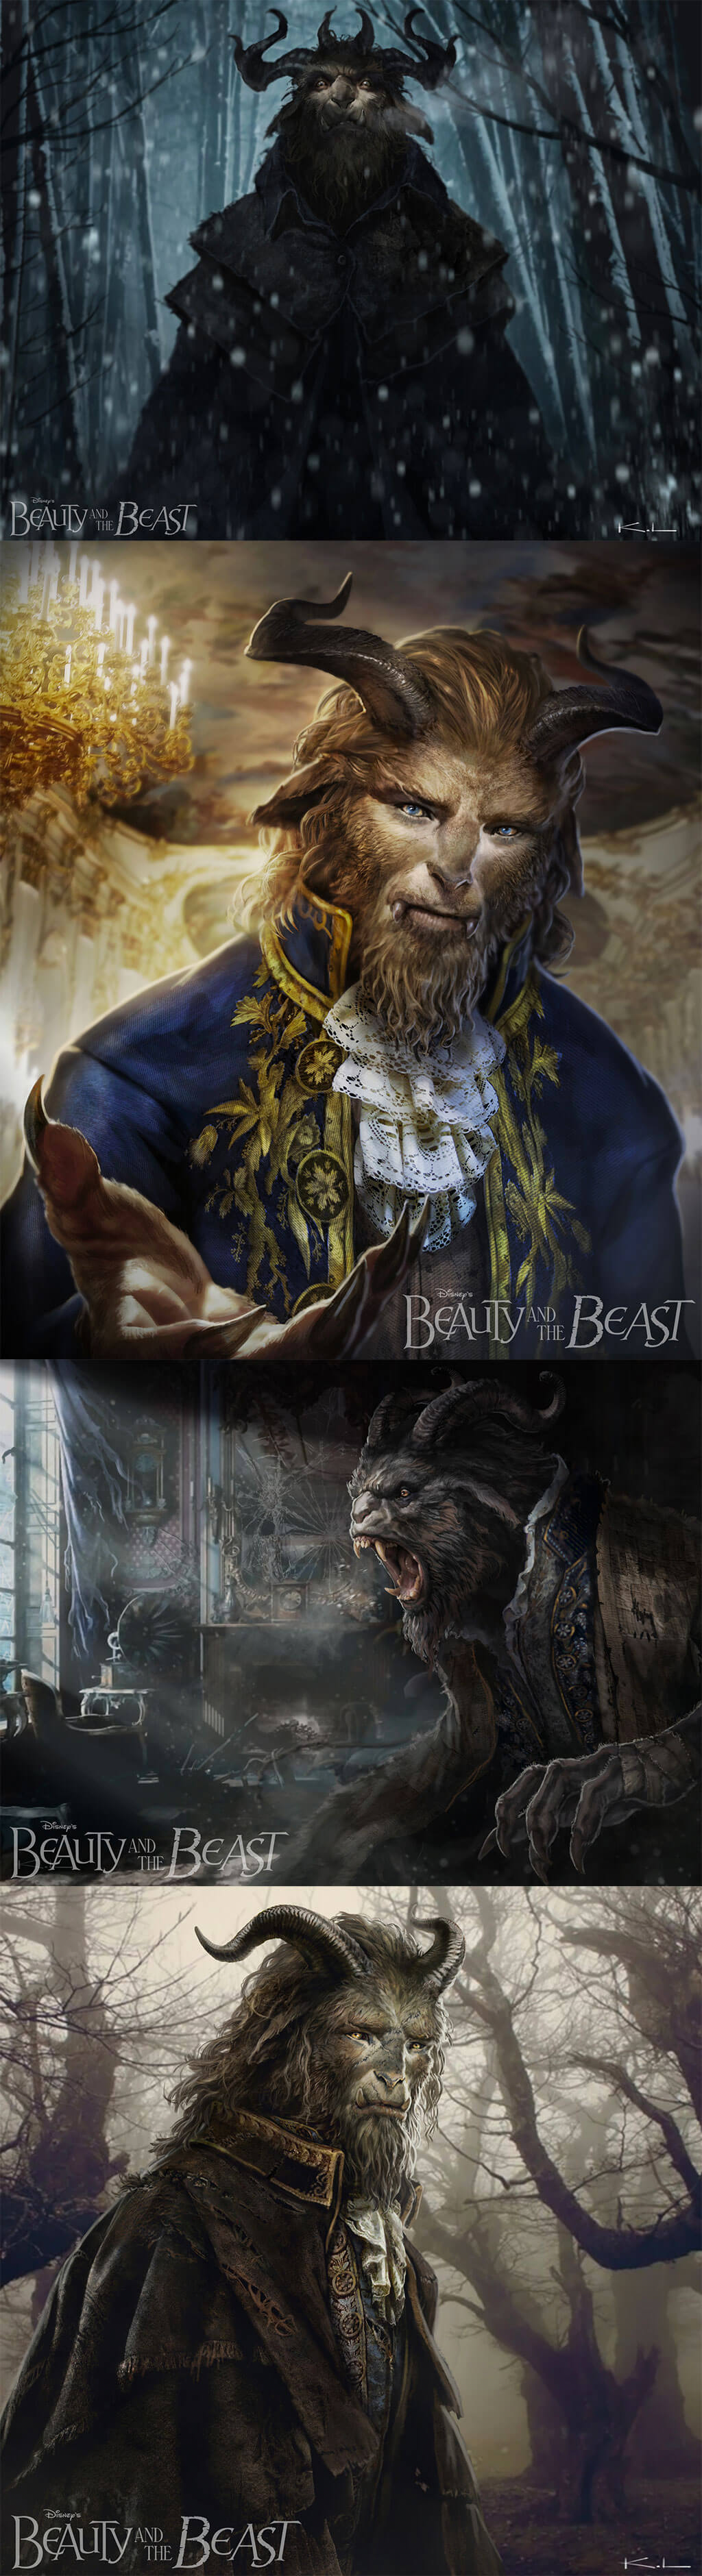 Beauty and the Beast Fan Art by Karl Lindberg